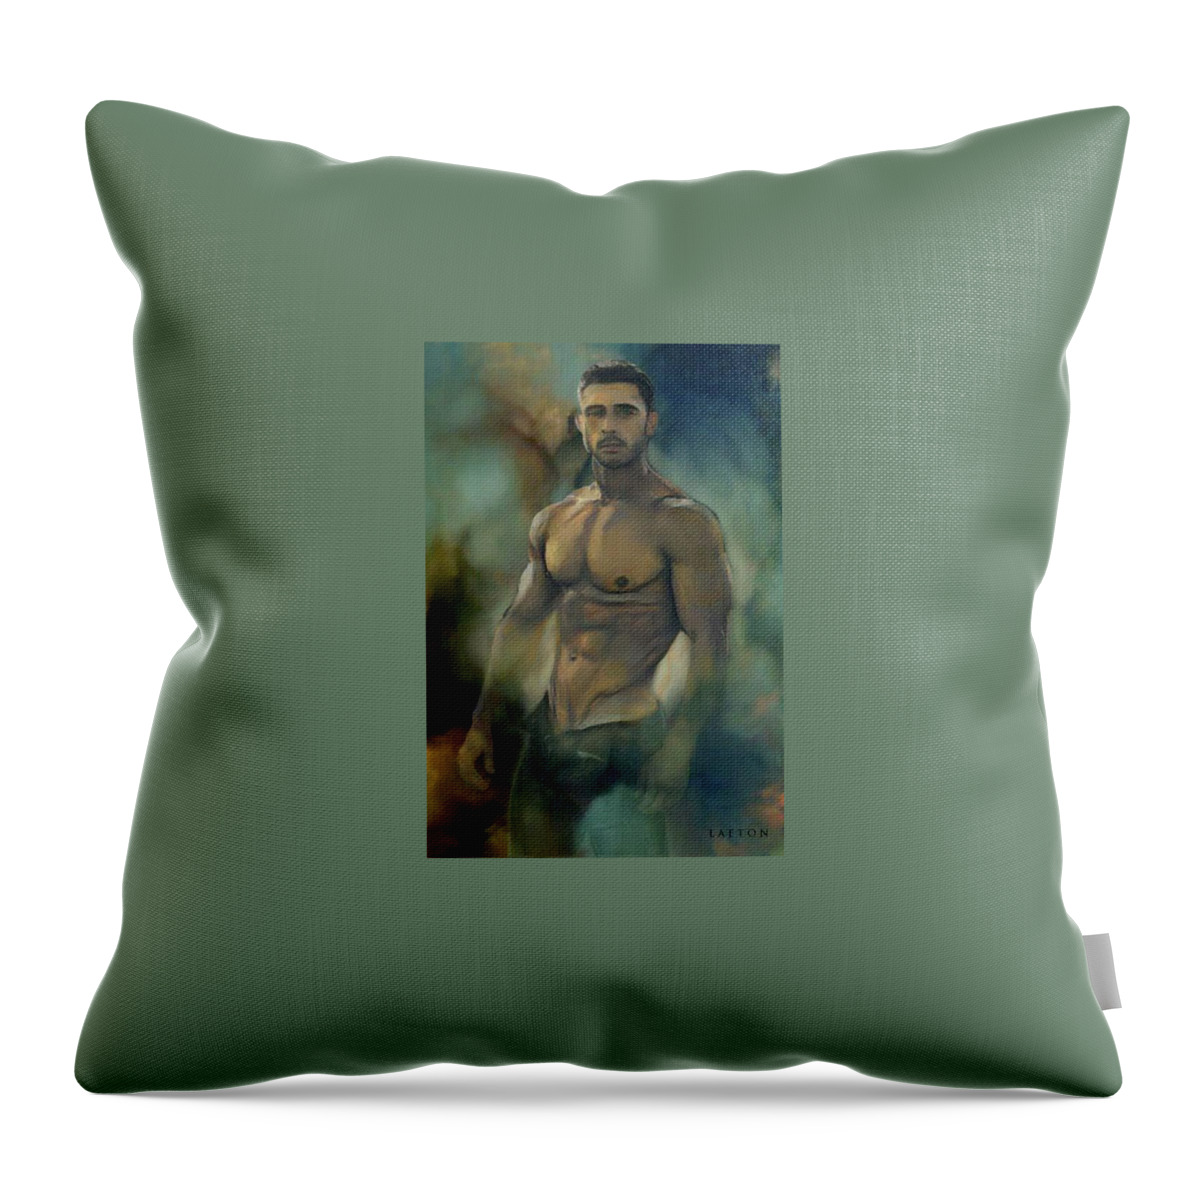 Male Throw Pillow featuring the digital art Lincoln by Richard Laeton